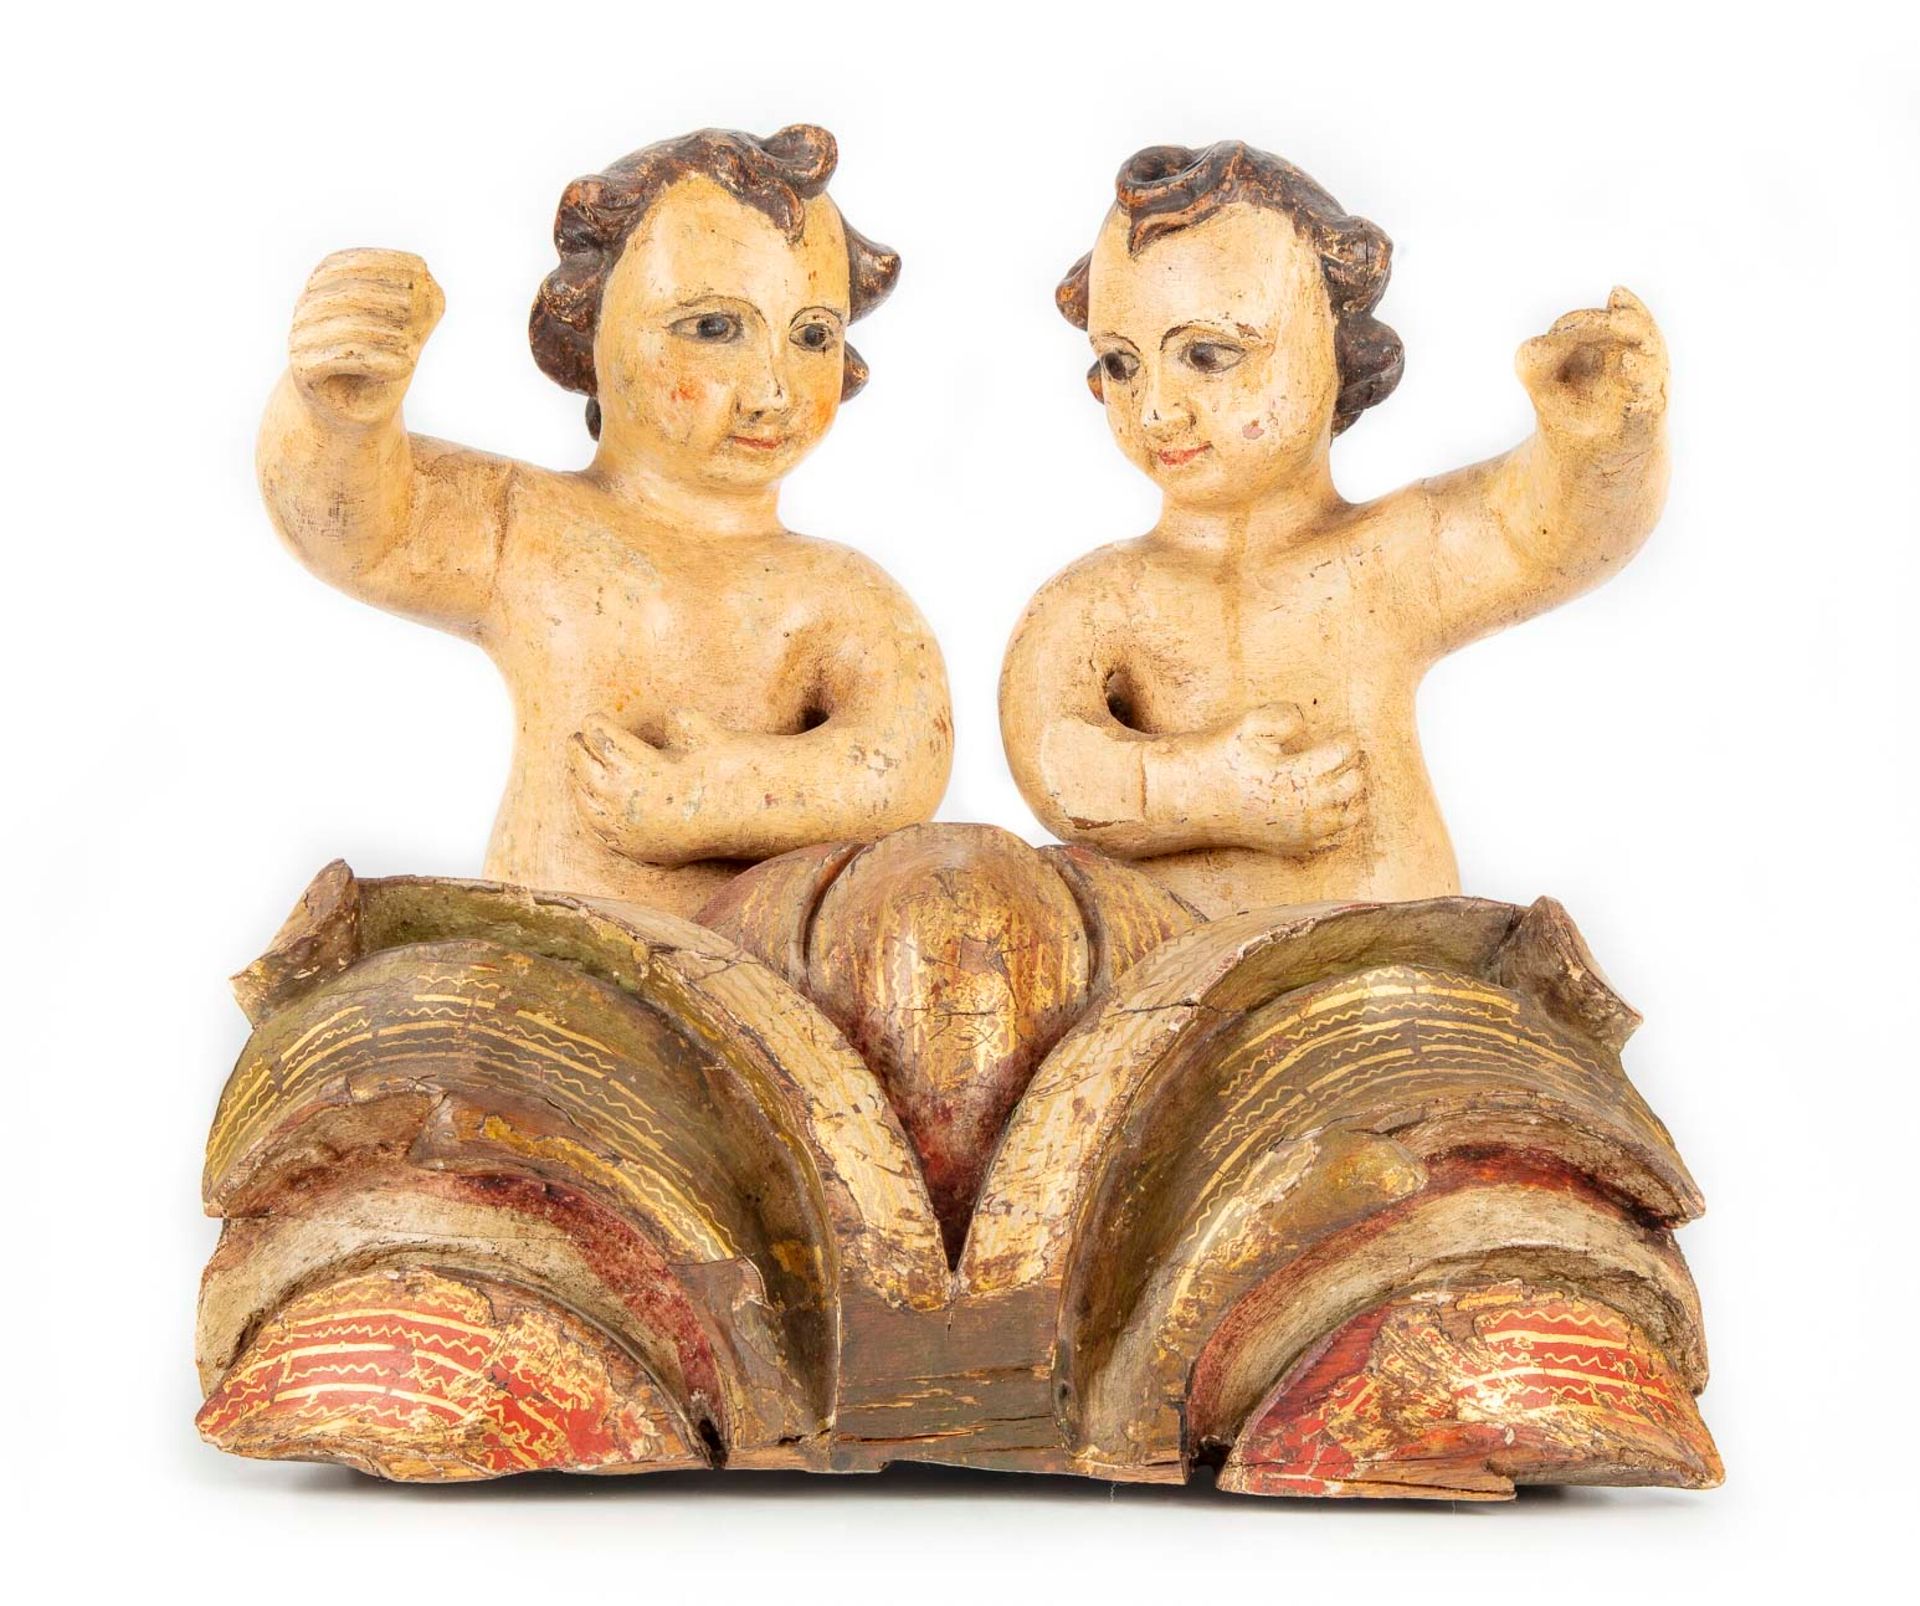 Null 多色木雕组，表现两个小天使拿着火把，正面有树叶装饰

外国作品，可能是奥地利的

18世纪

H.39 cm; L. : 40 cm

磨损和撕裂